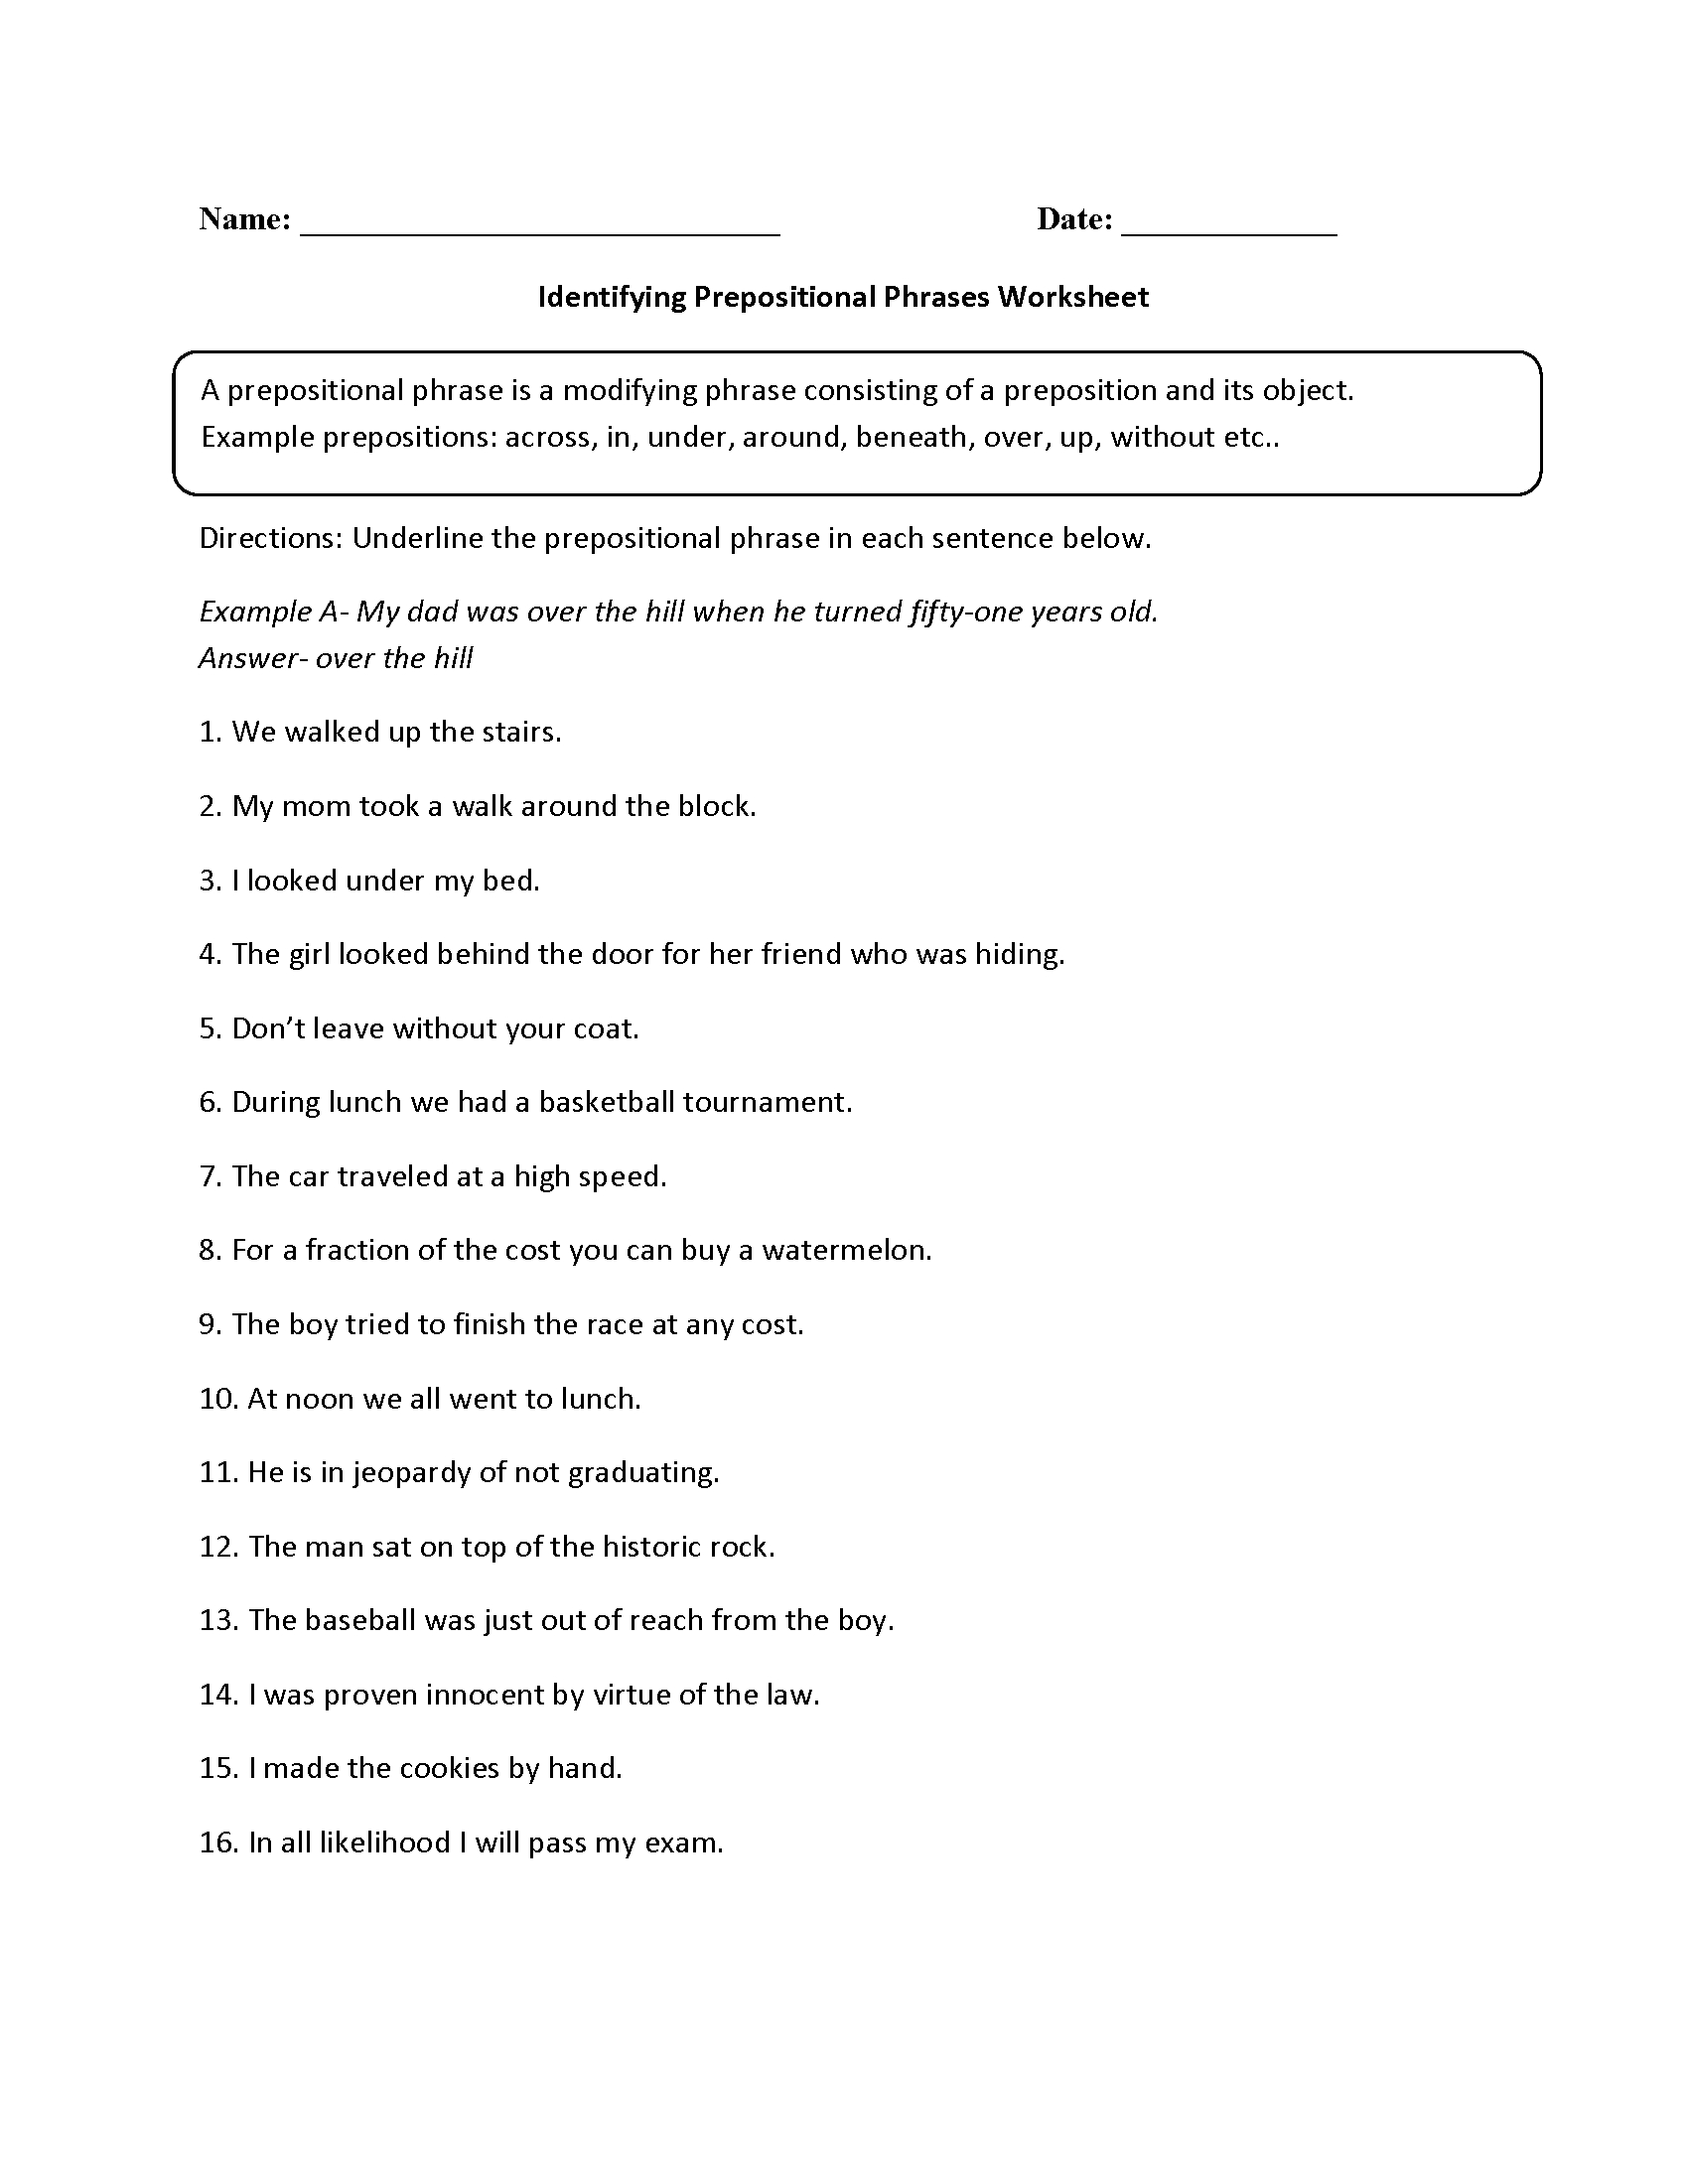 Prepositional Phrases Worksheets  Identifying Prepositional